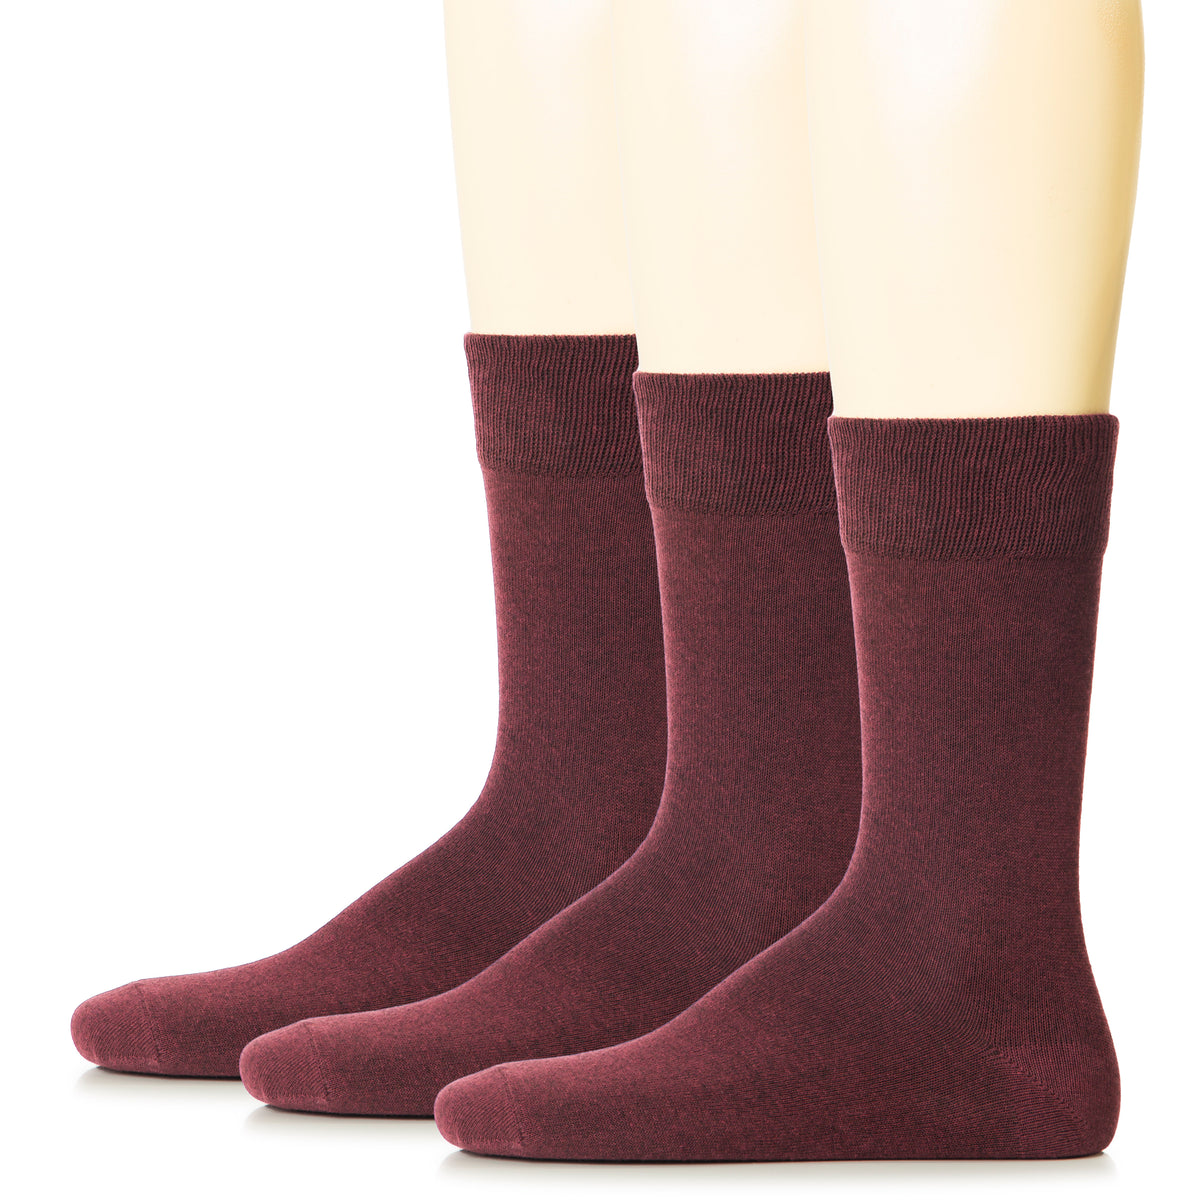 Hugh Ugoli Men Cotton Dress Socks XL / L / M / S Sizes, 3 Pairs | Shoe Size: 6-8 | Burgundy